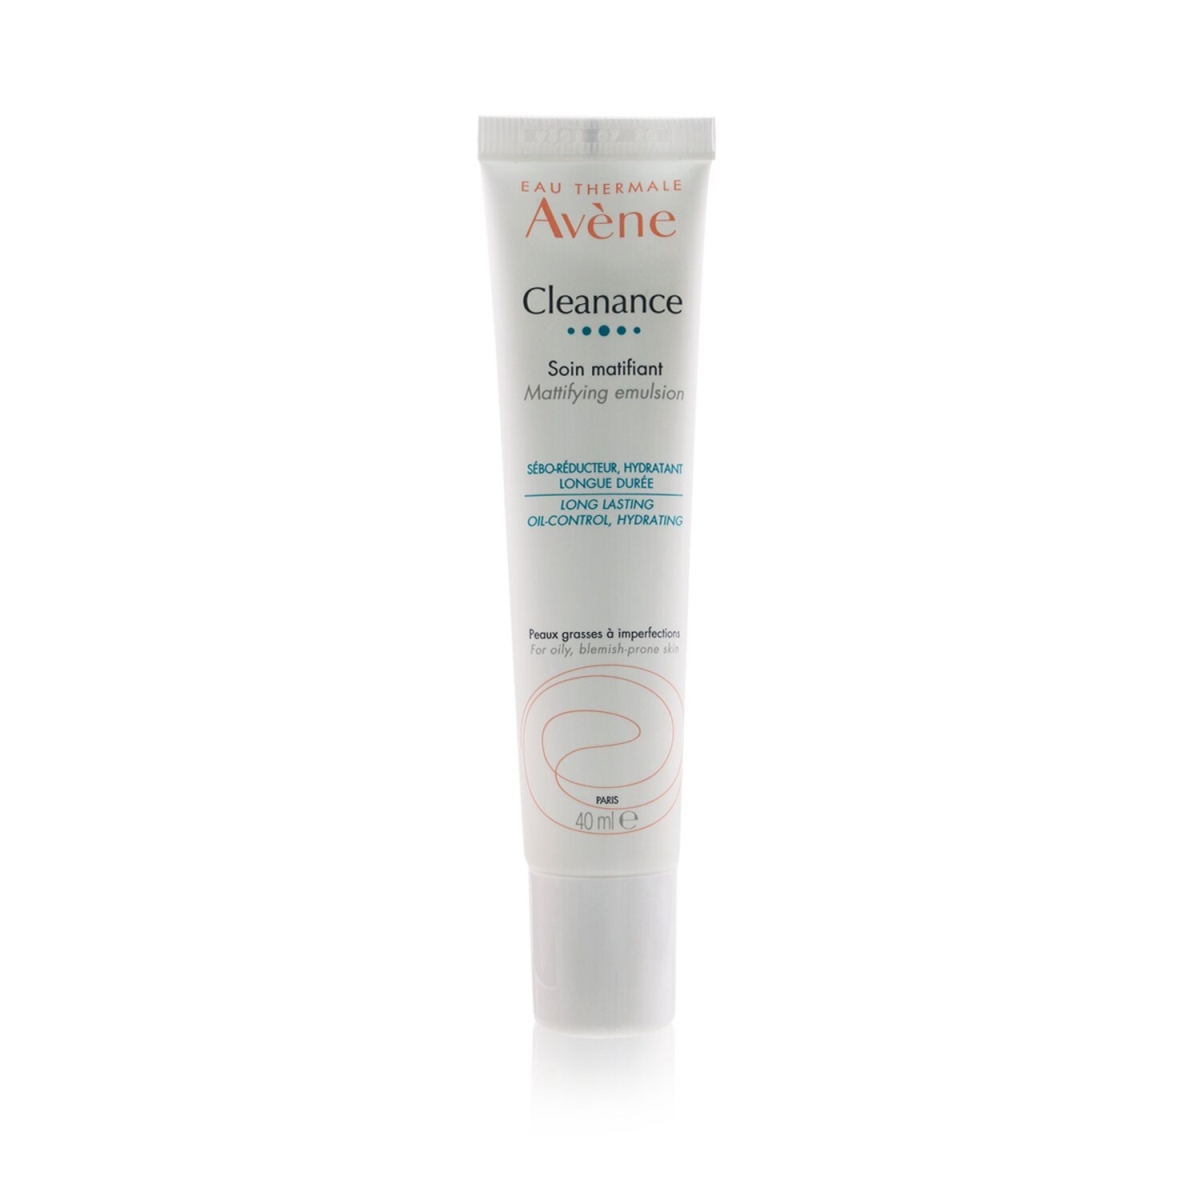 Picture of Avene 264193 1.35 oz Cleanance Mattifying Emulsion for Oily, Blemish-Prone Skin